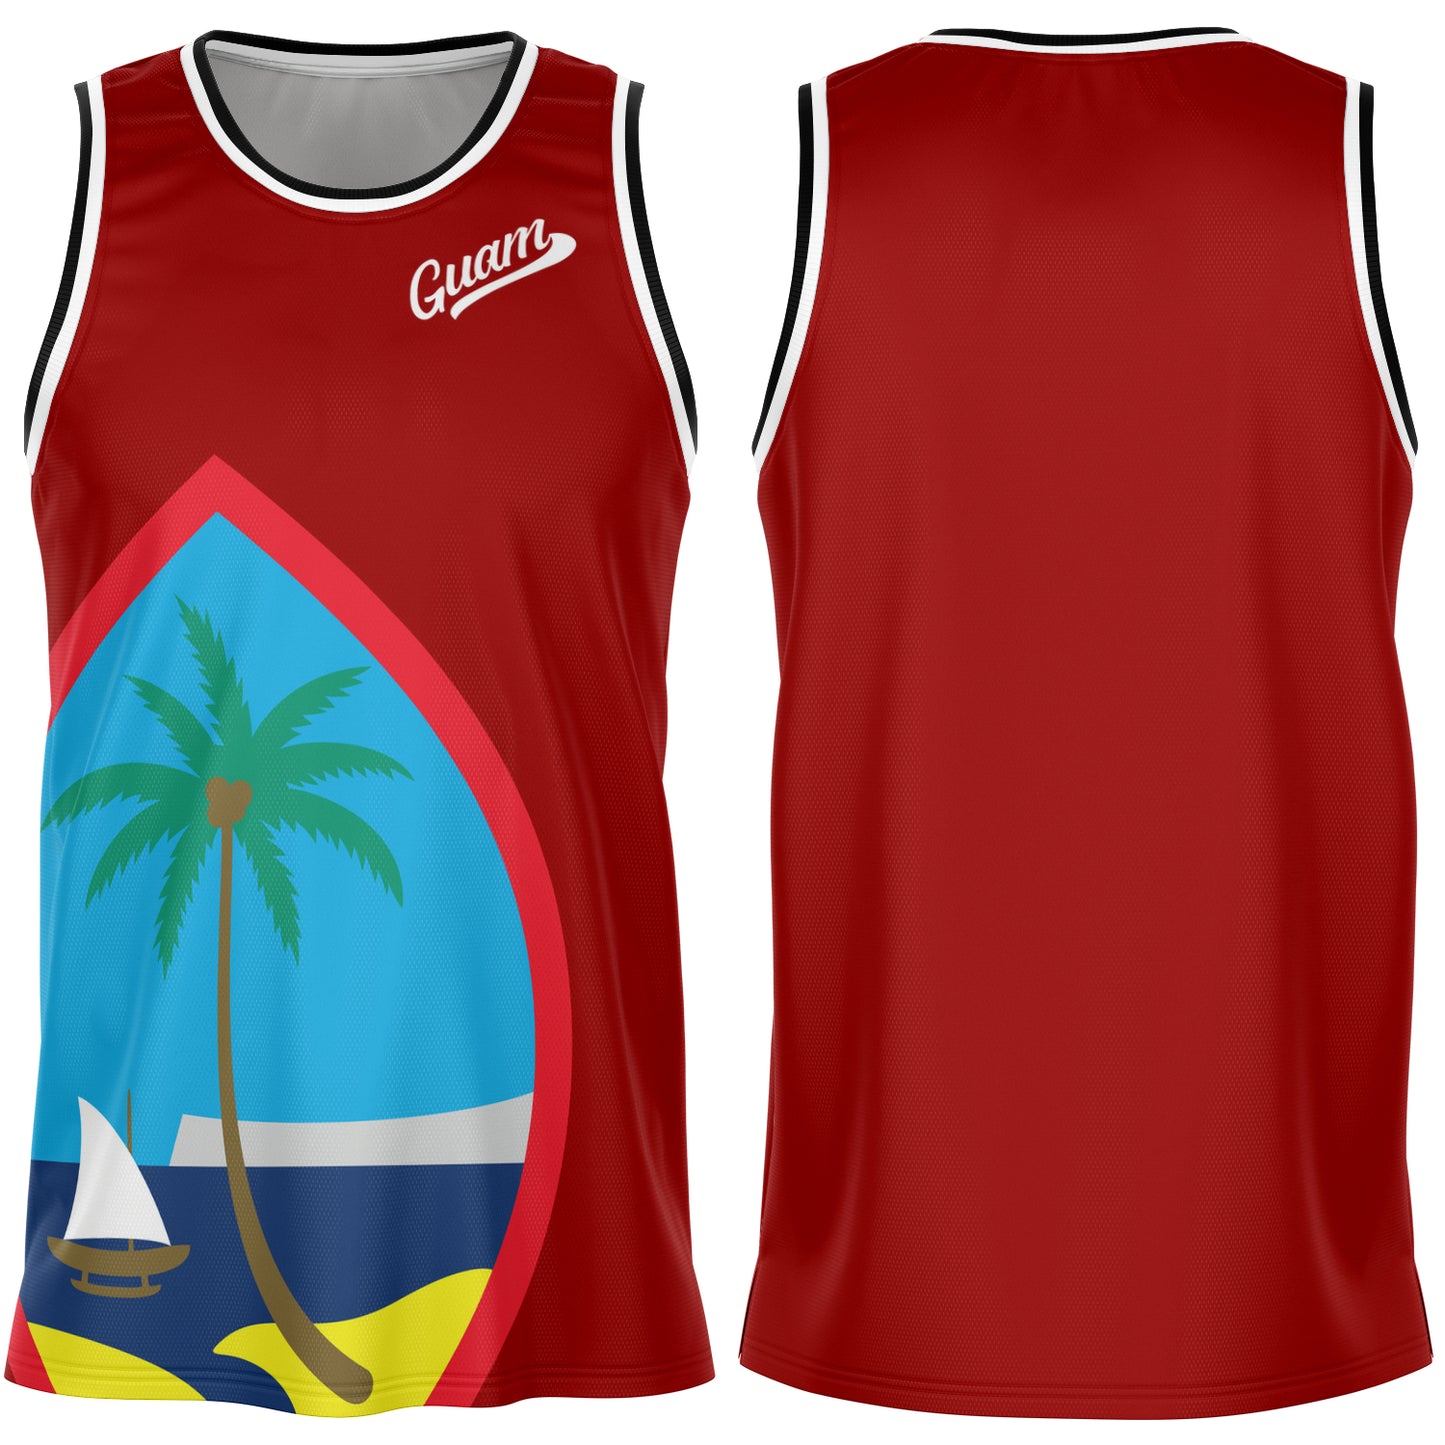 Guam Seal Red Basketball Jersey